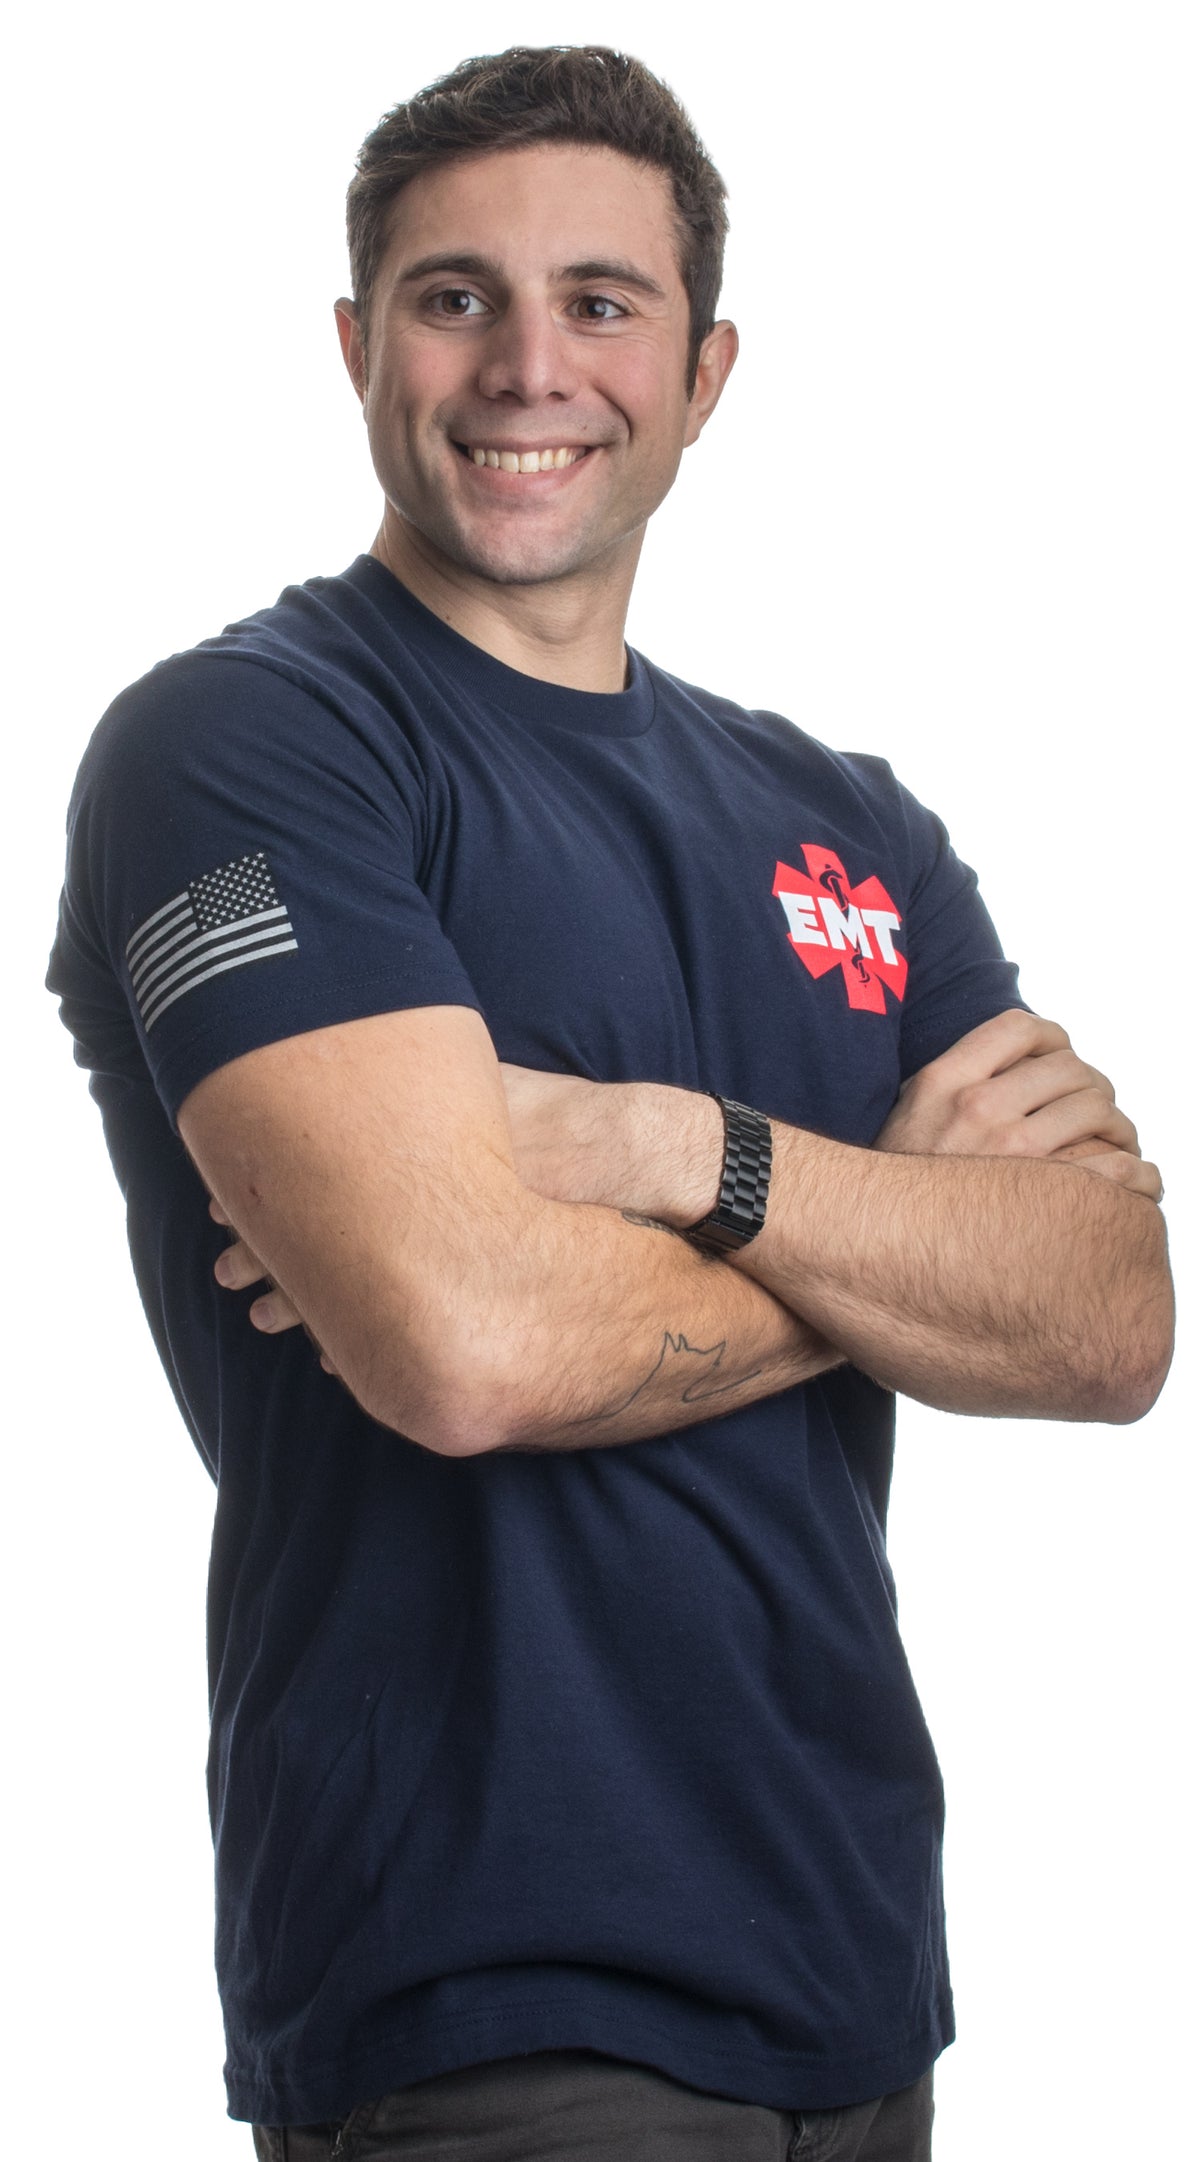 EMT AEMT Star Life | Medical Paramedic Ambulance Emergency for Men Women T-shirt